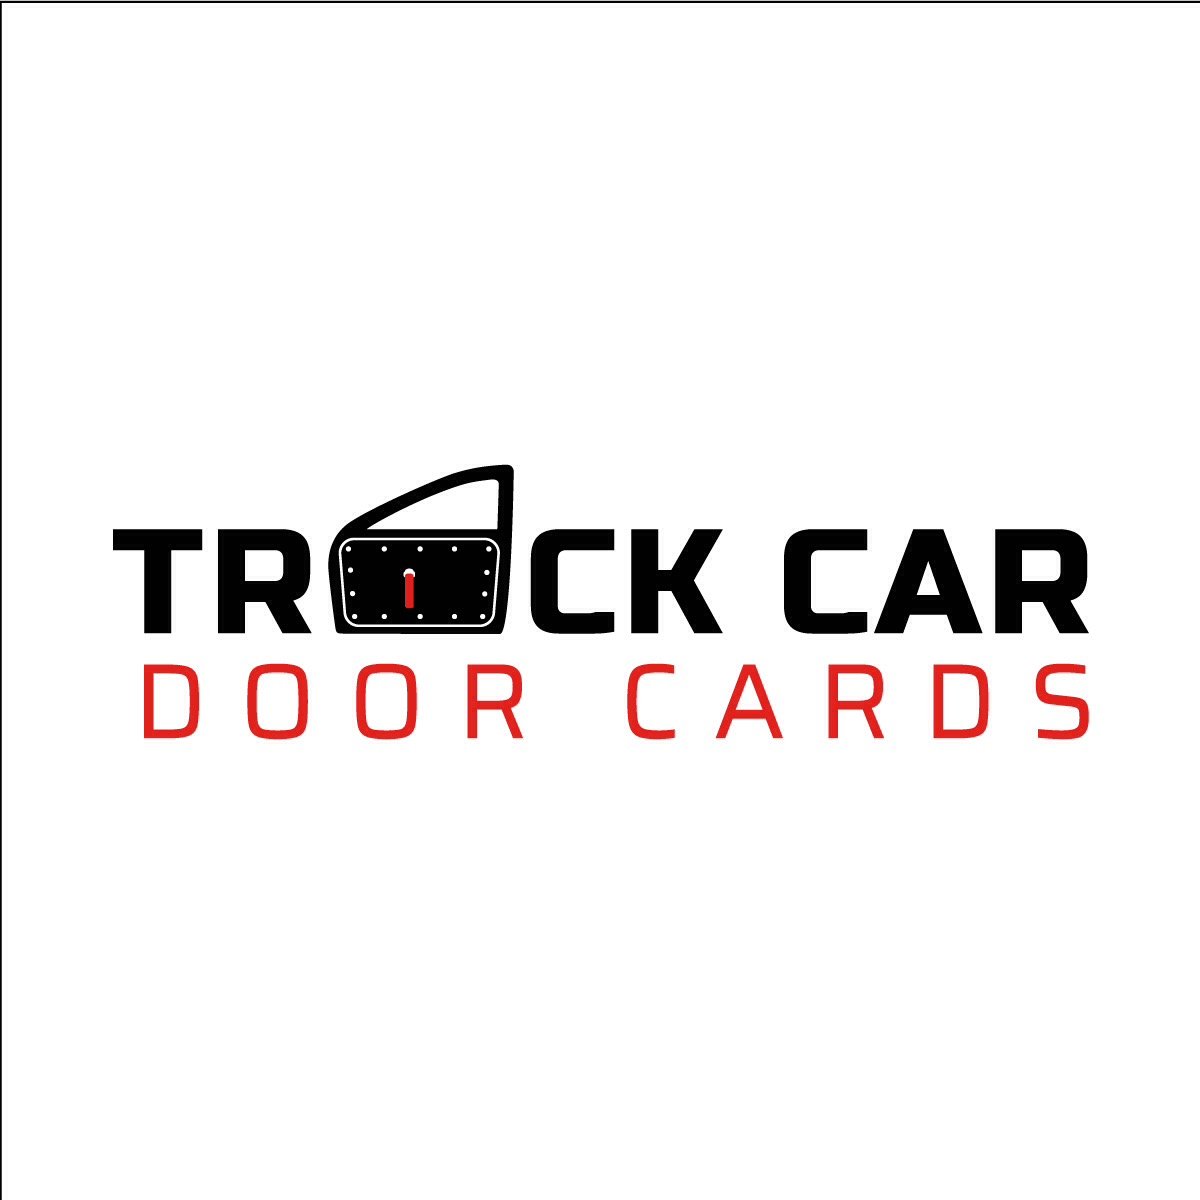 (c) Trackcardoorcards.co.uk